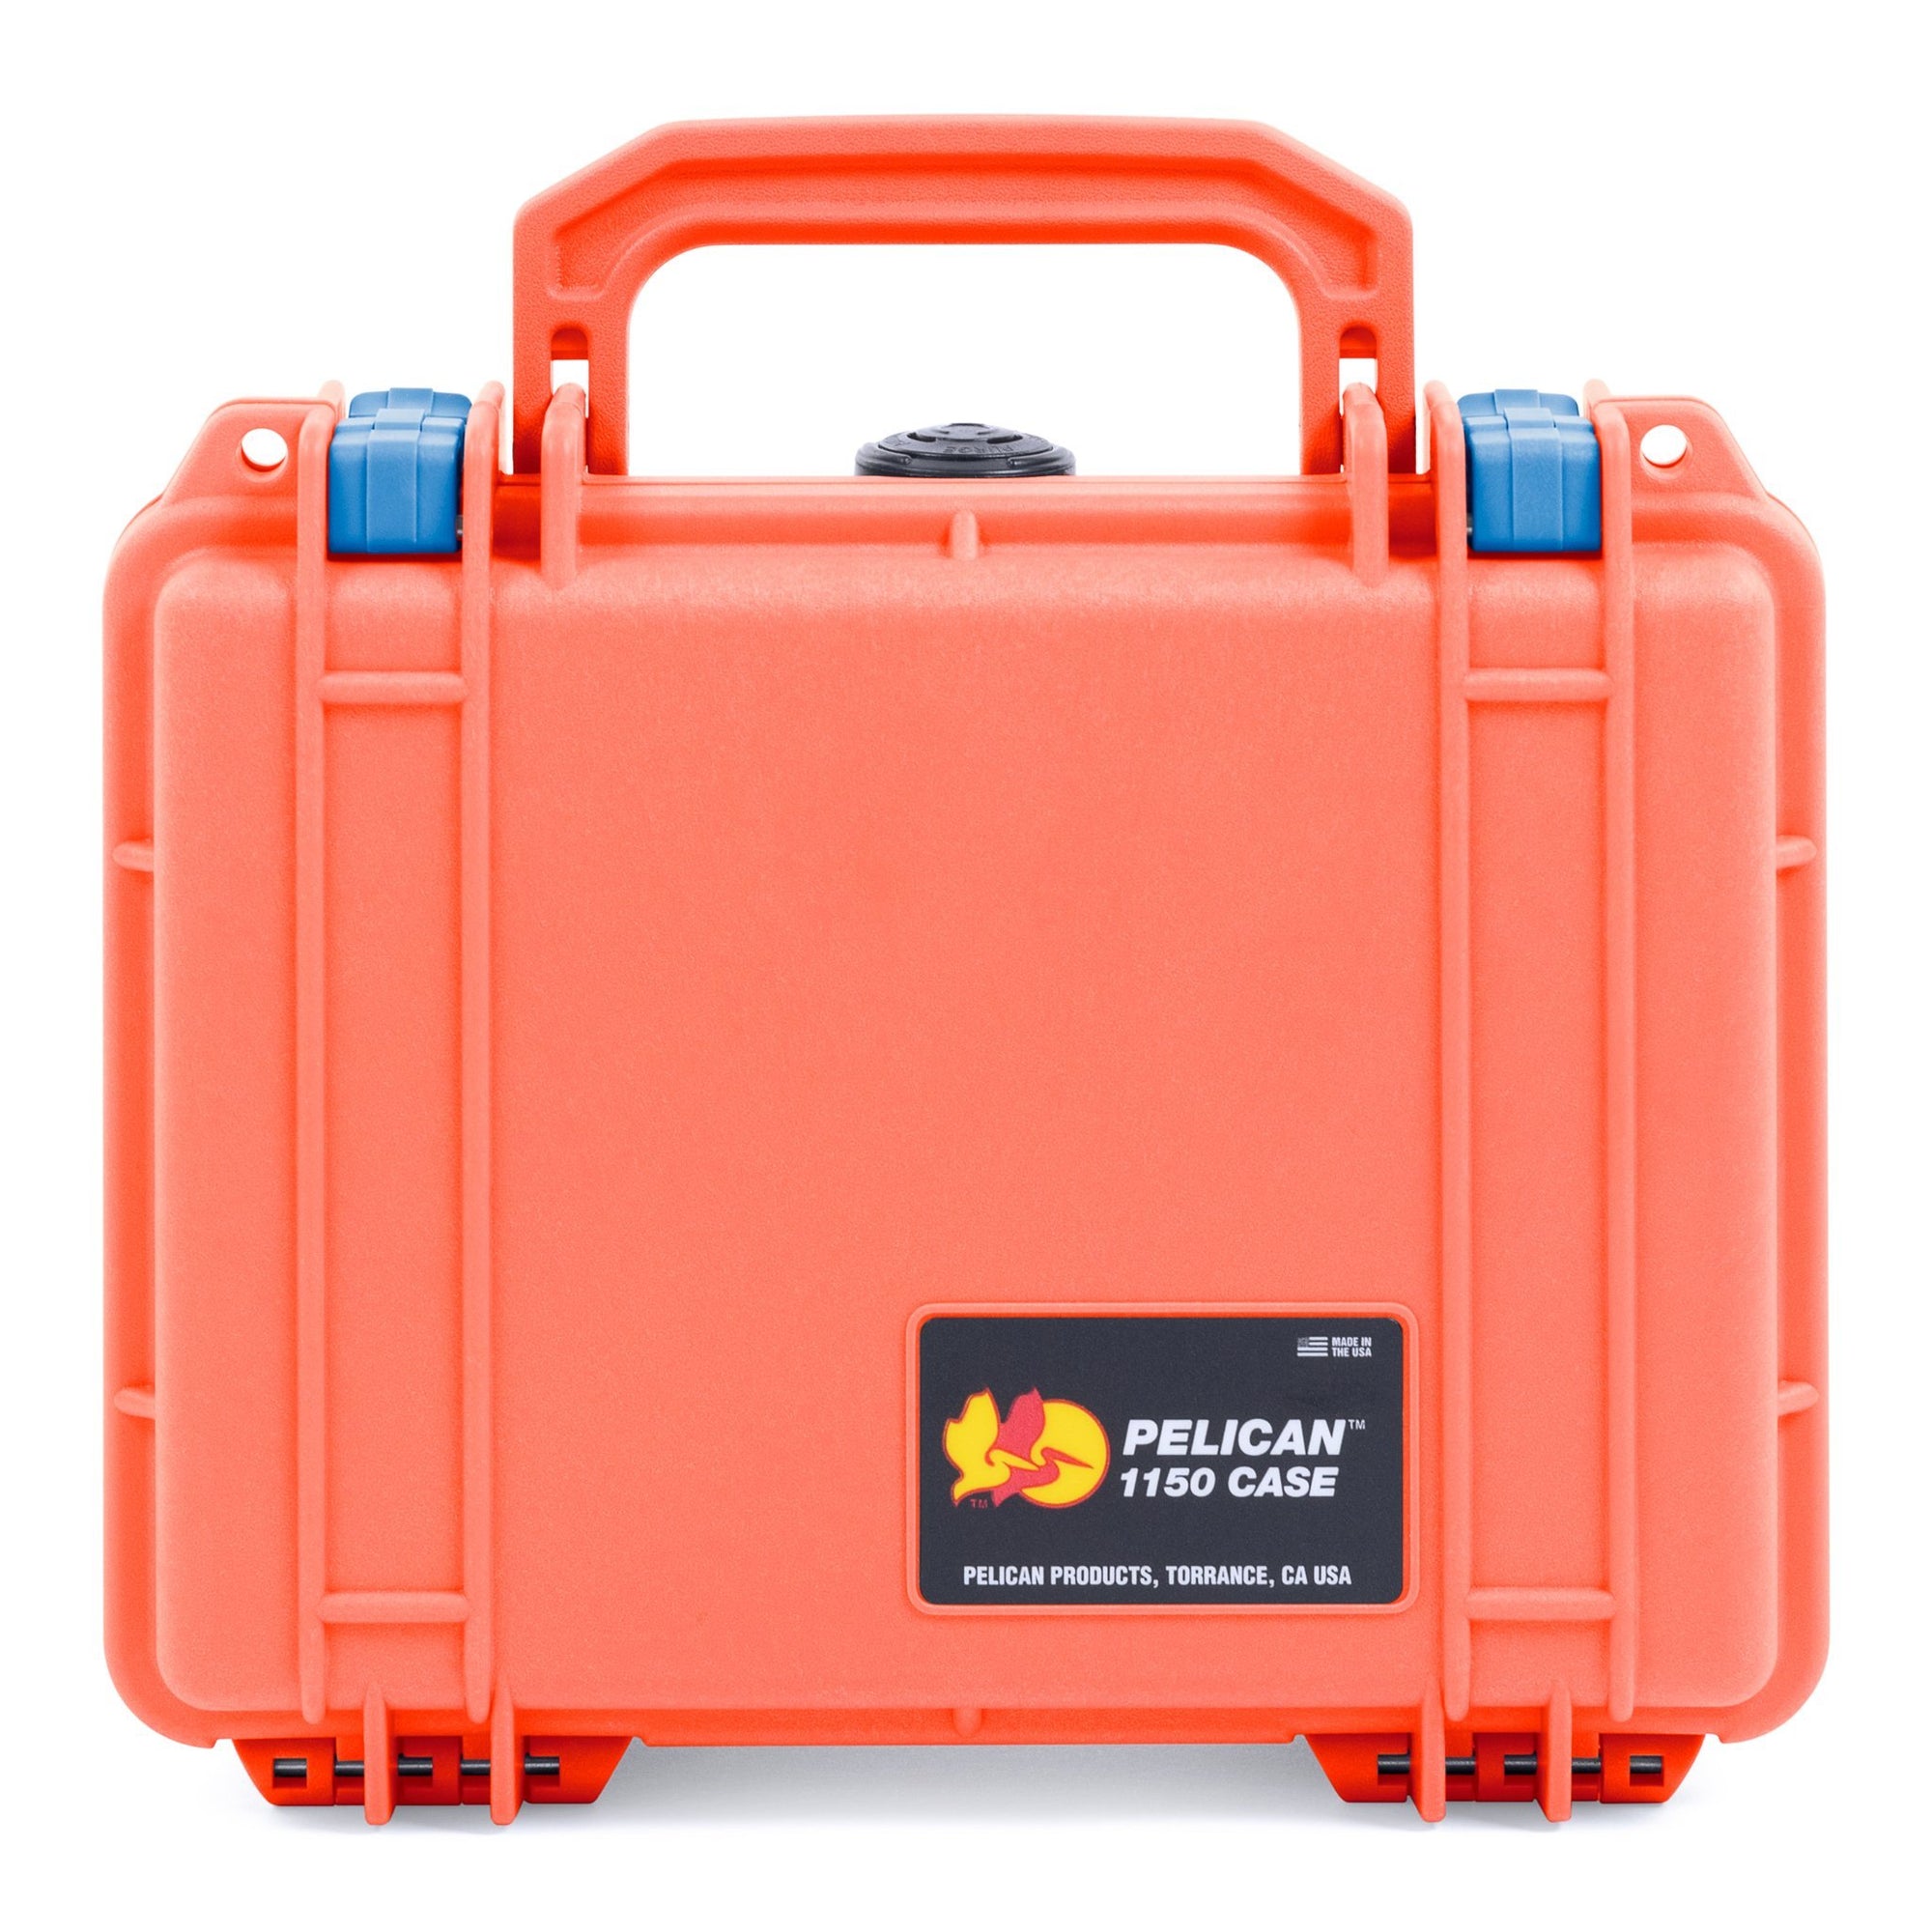 Pelican 1150 Case, Orange with Blue Latches ColorCase 